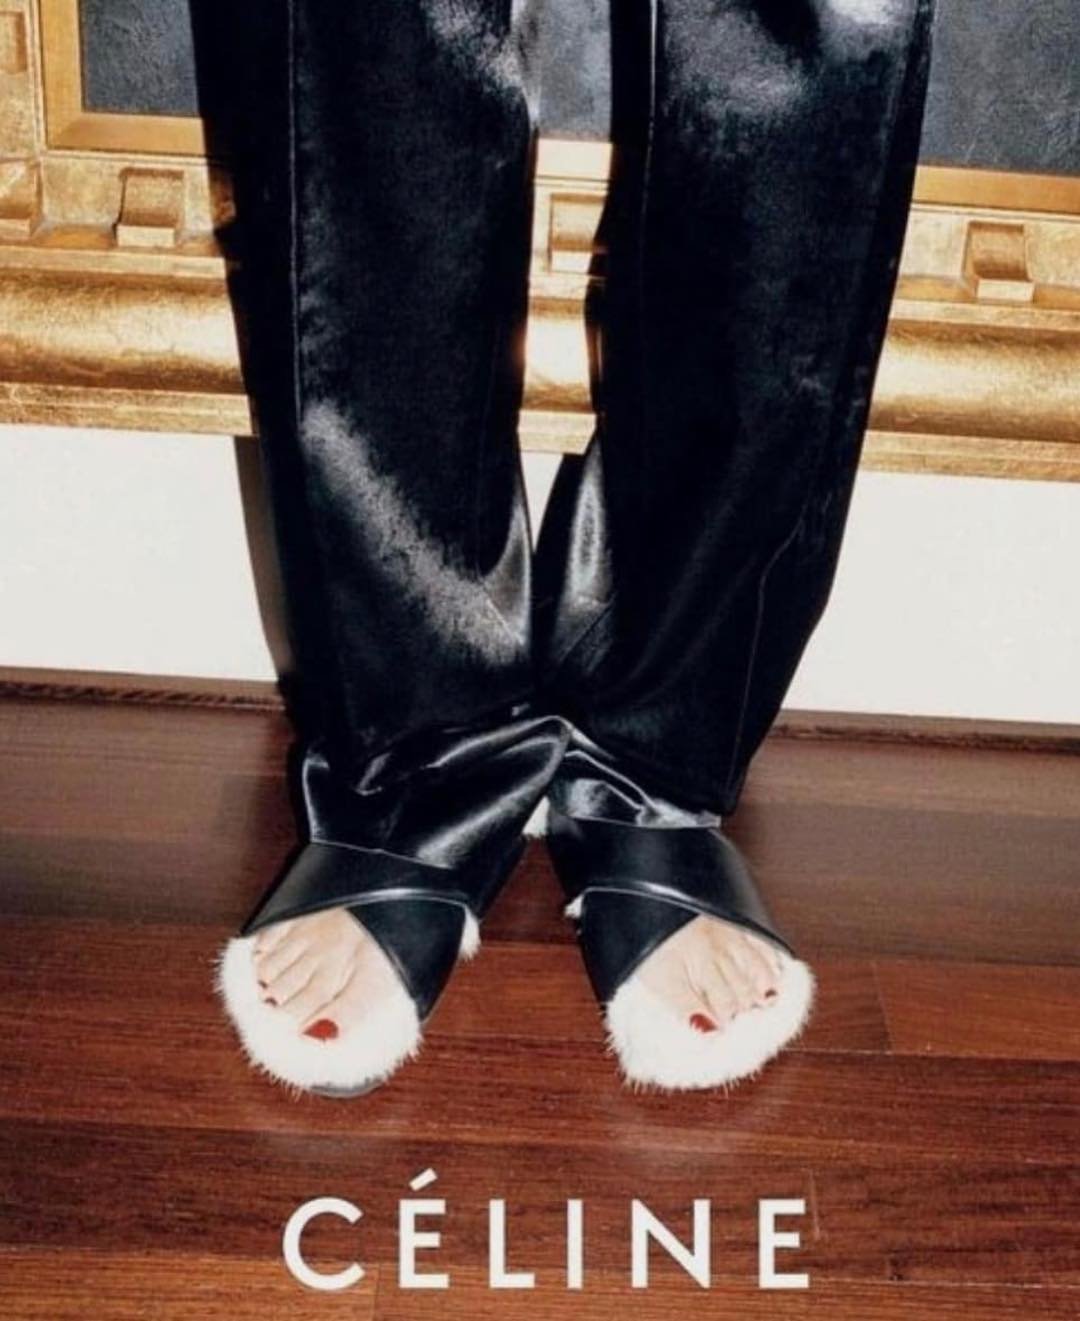 Céline - Ugly shoes - ugly shoes - Inverno - Paris - https://stealthelook.com.br